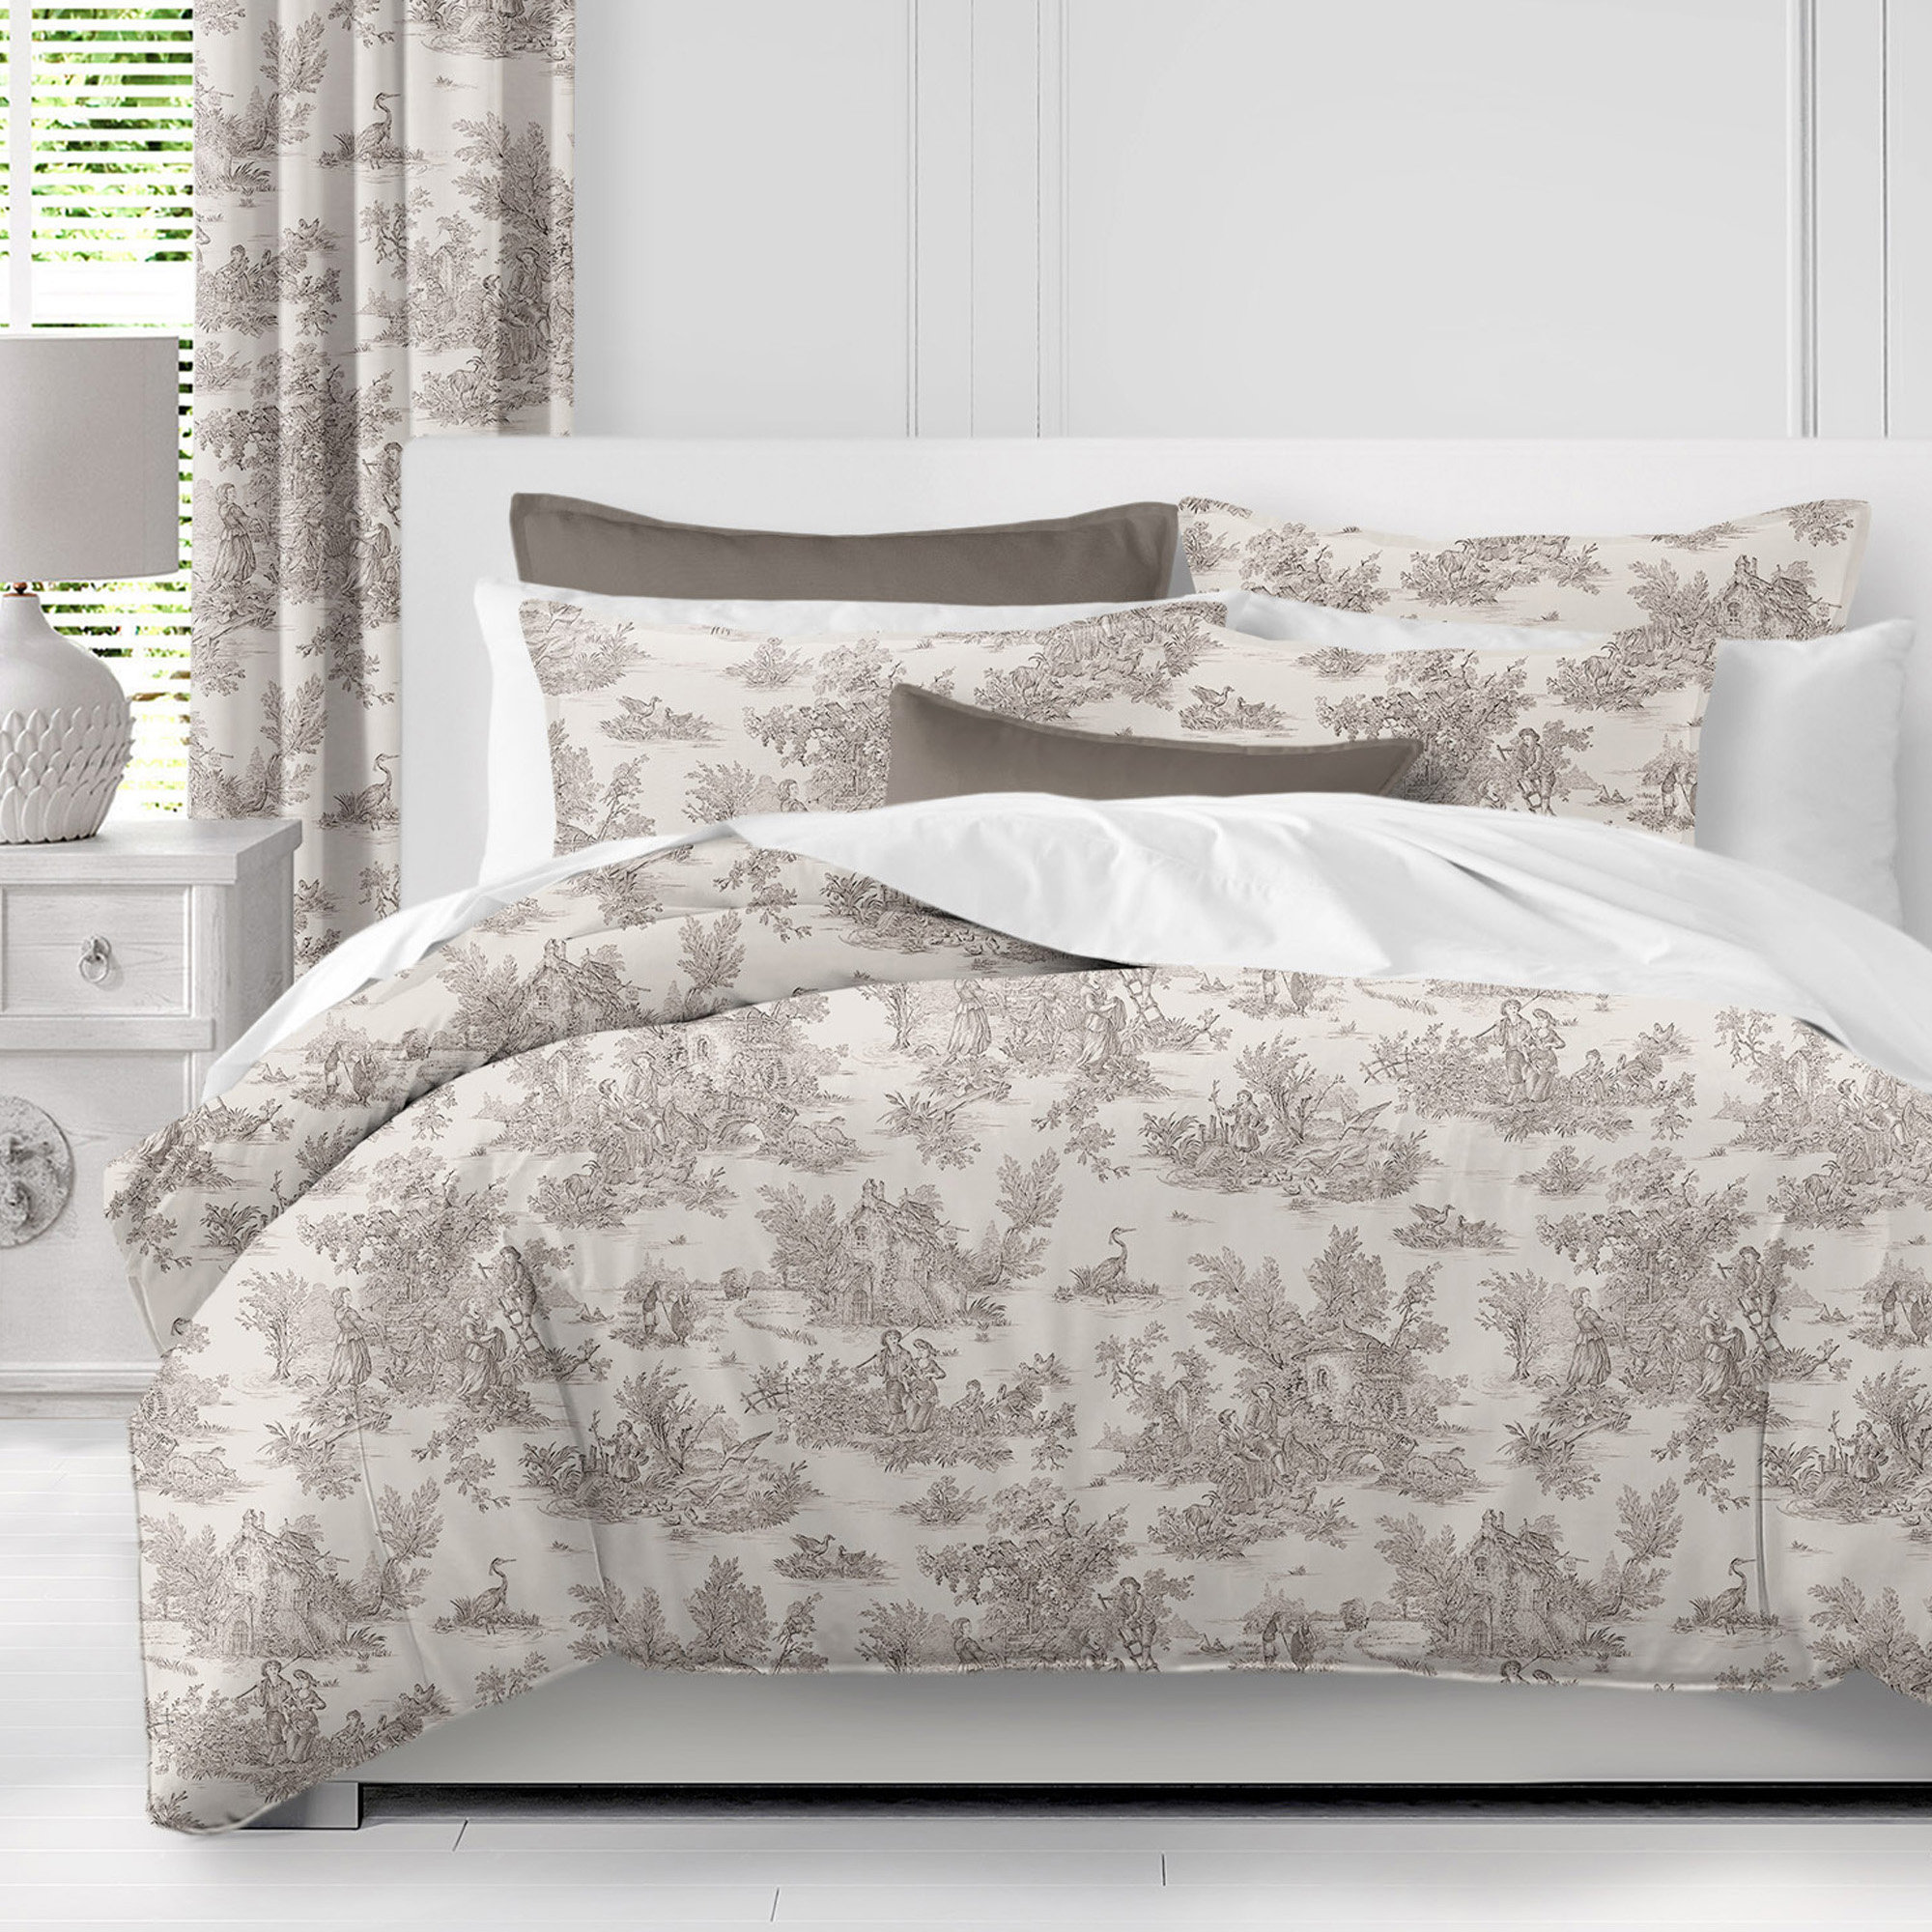 The Tailor's Bed Toile De Jouy 100% Cotton Comforter Set Wayfair